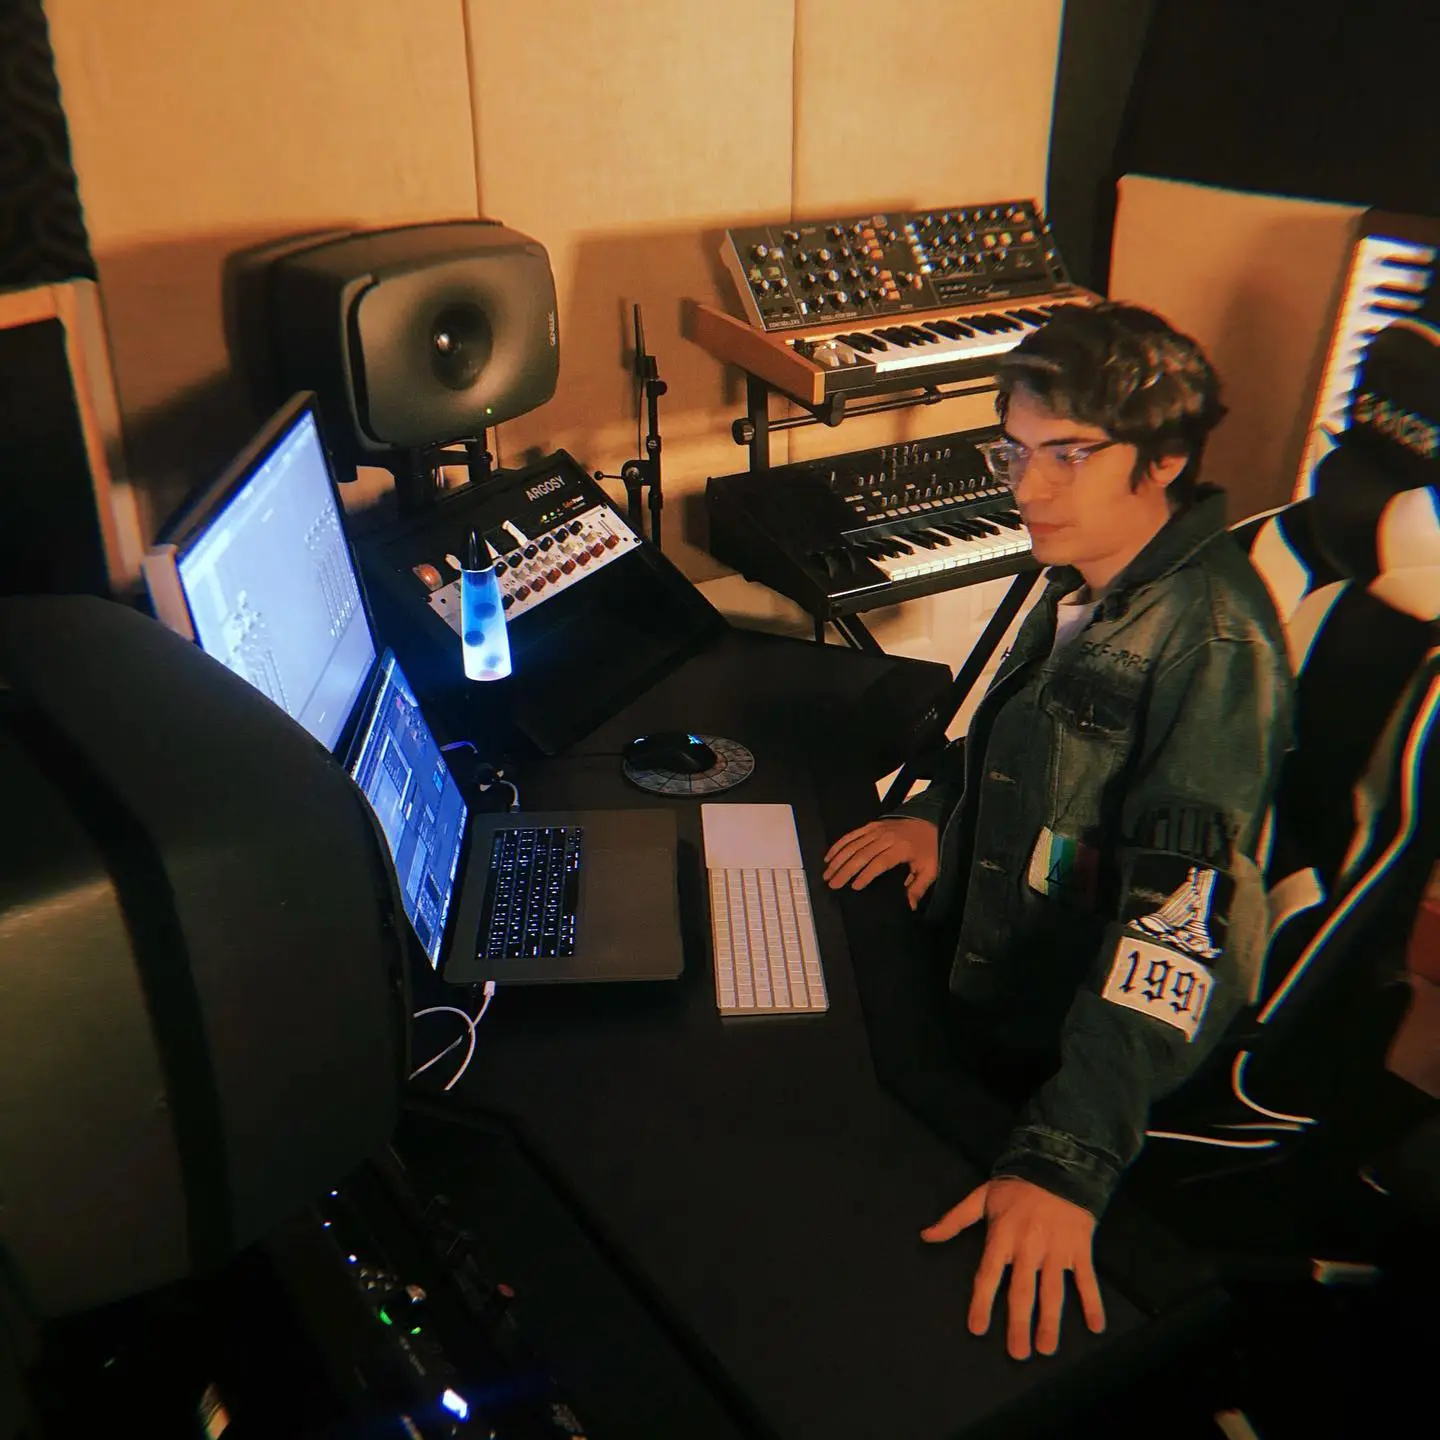 mastering studio